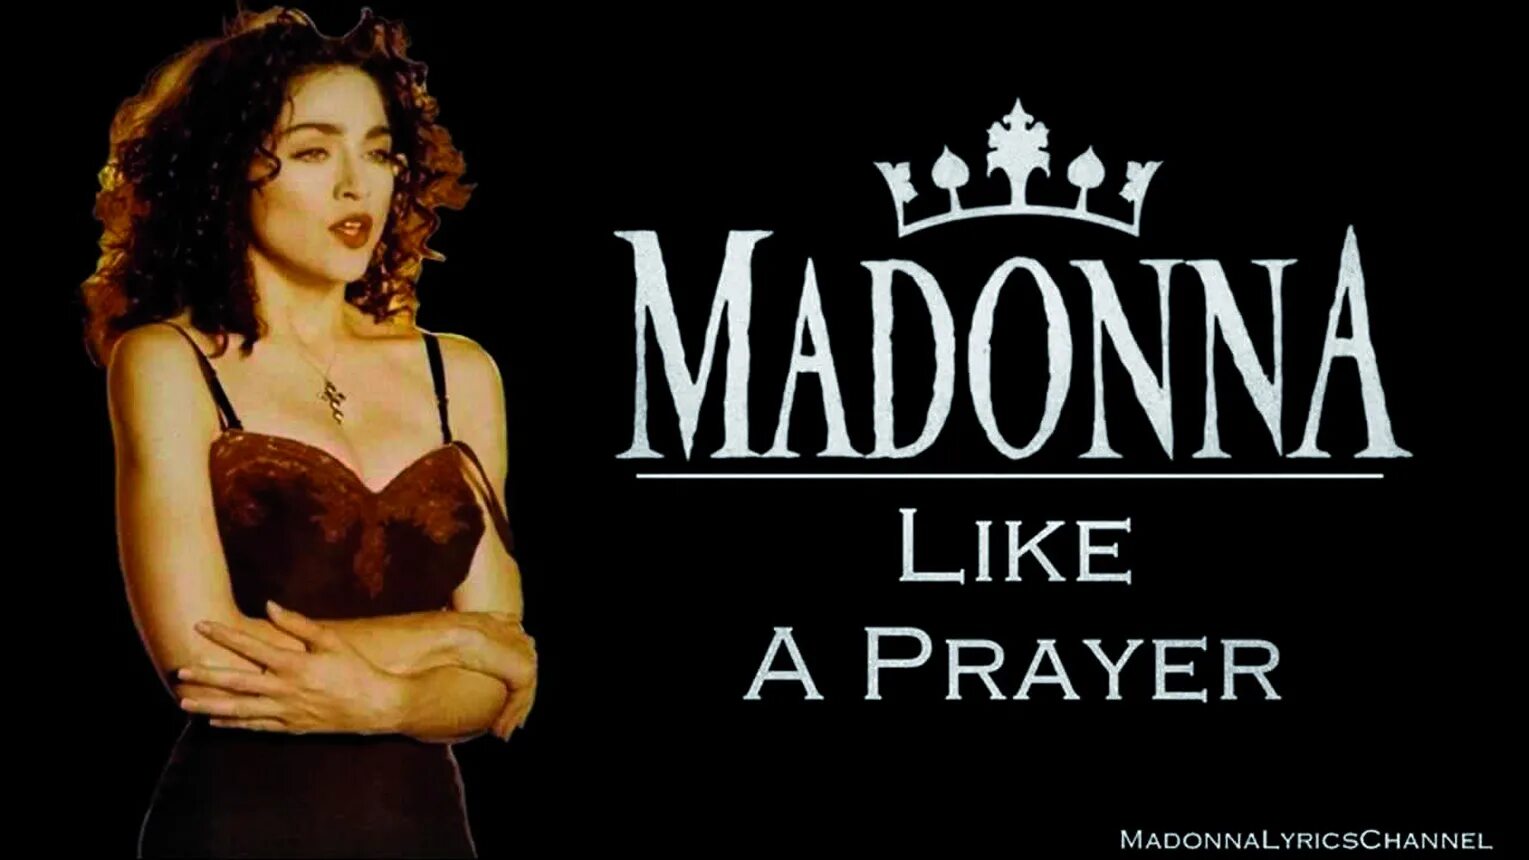 Like madonna песня. Мадонна like a Prayer. Мадонна лайк а Прайер. Madonna like a Prayer обложка. Madonna 1989.